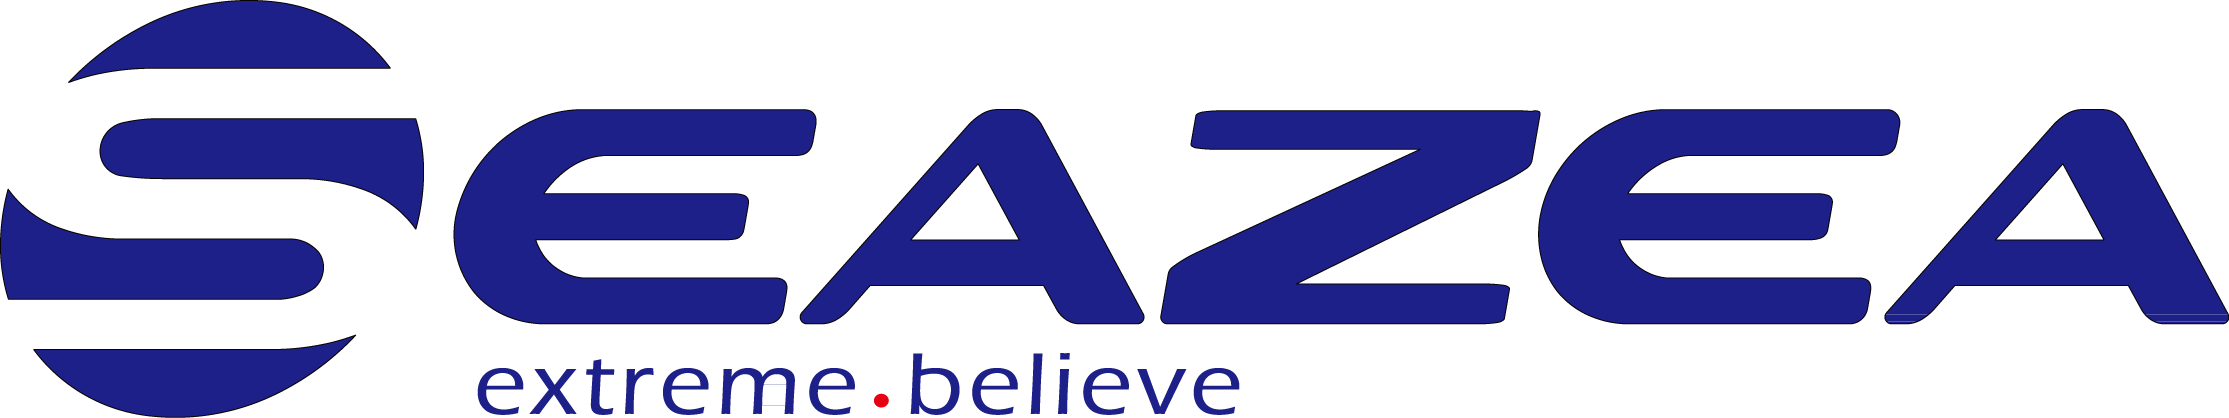 Seazea Machinery Co., Ltd